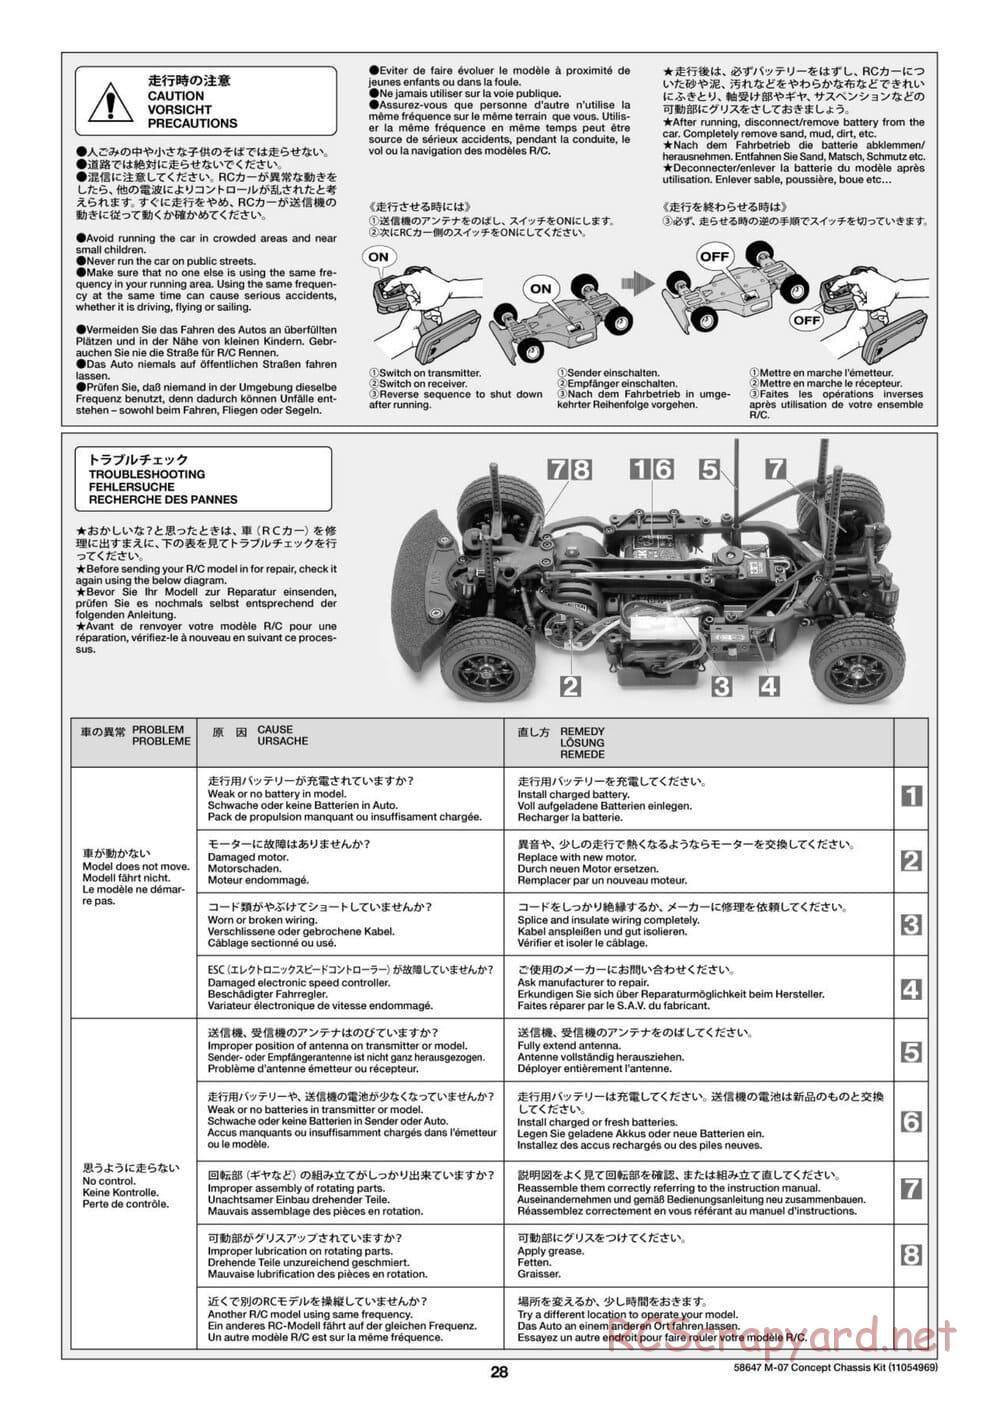 Tamiya - M-07 Concept Chassis - Manual - Page 28